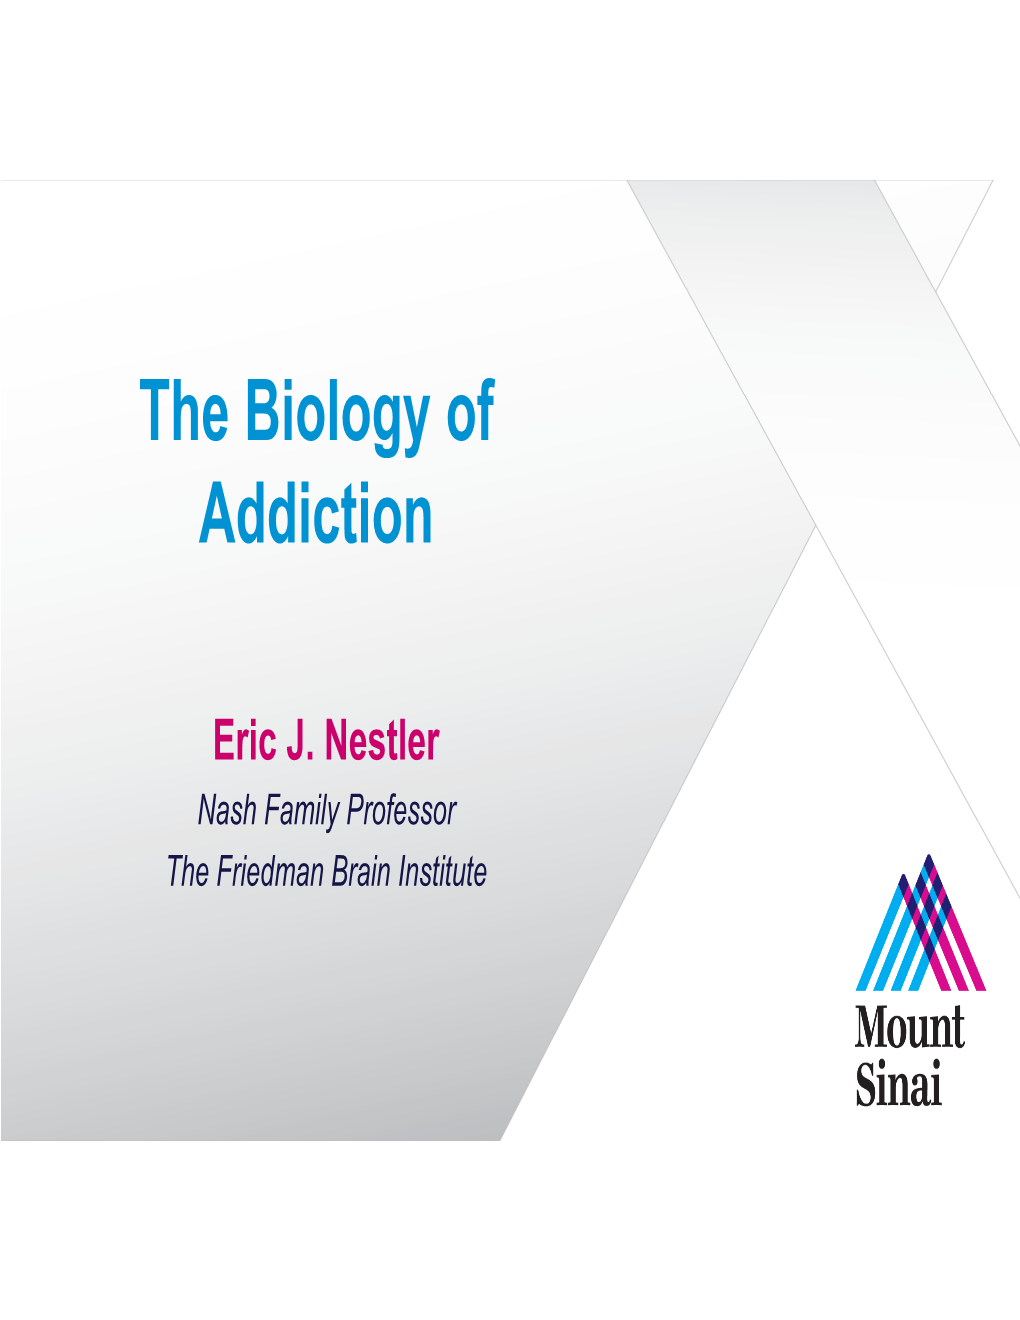 The Biology of Addiction